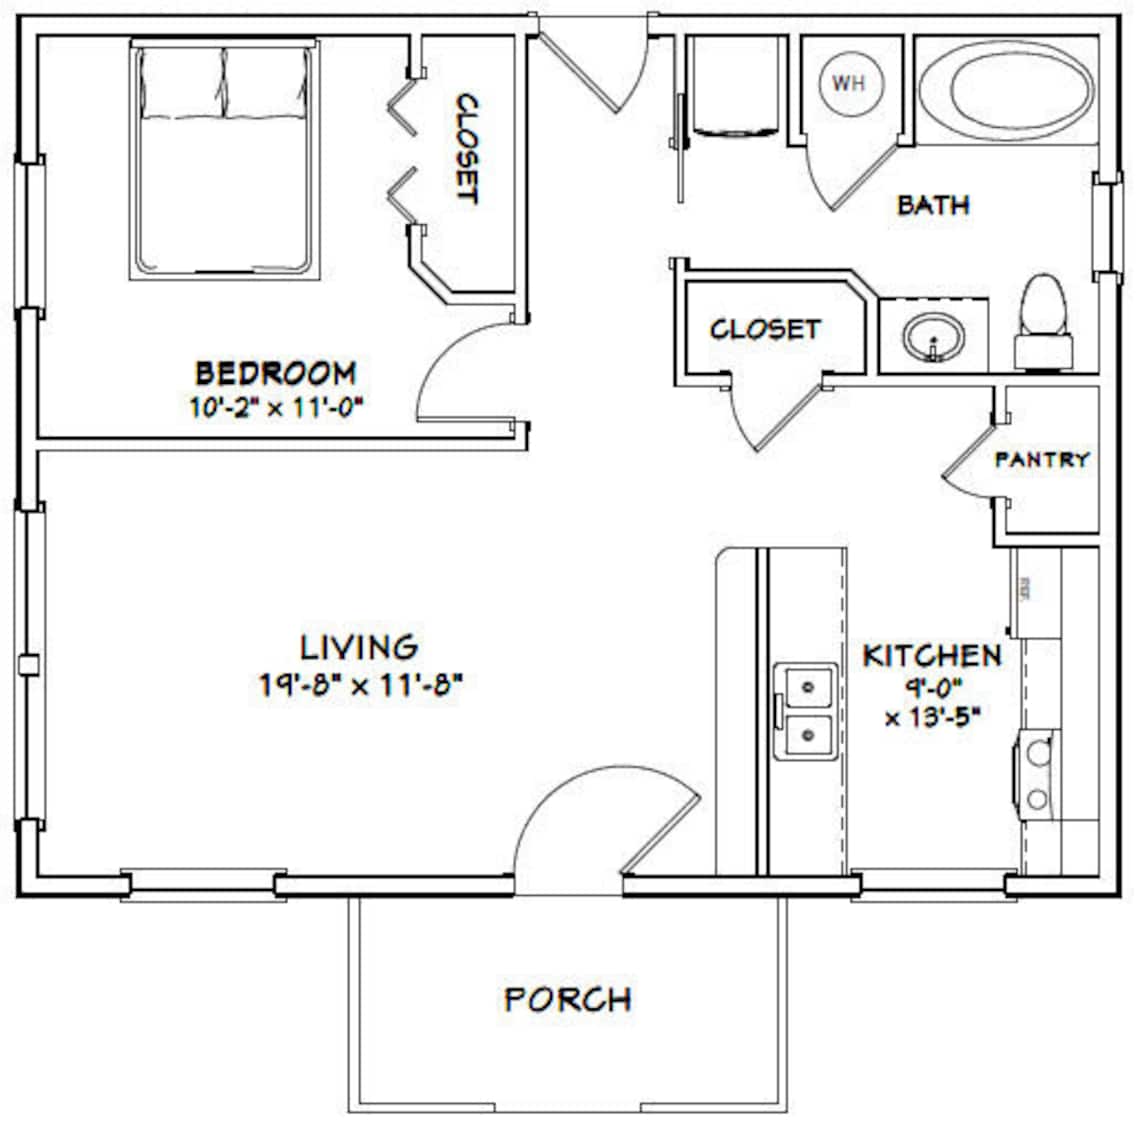 30x24 House 1-Bedroom 1-Bath 720 sq ft PDF Floor Plan | Etsy